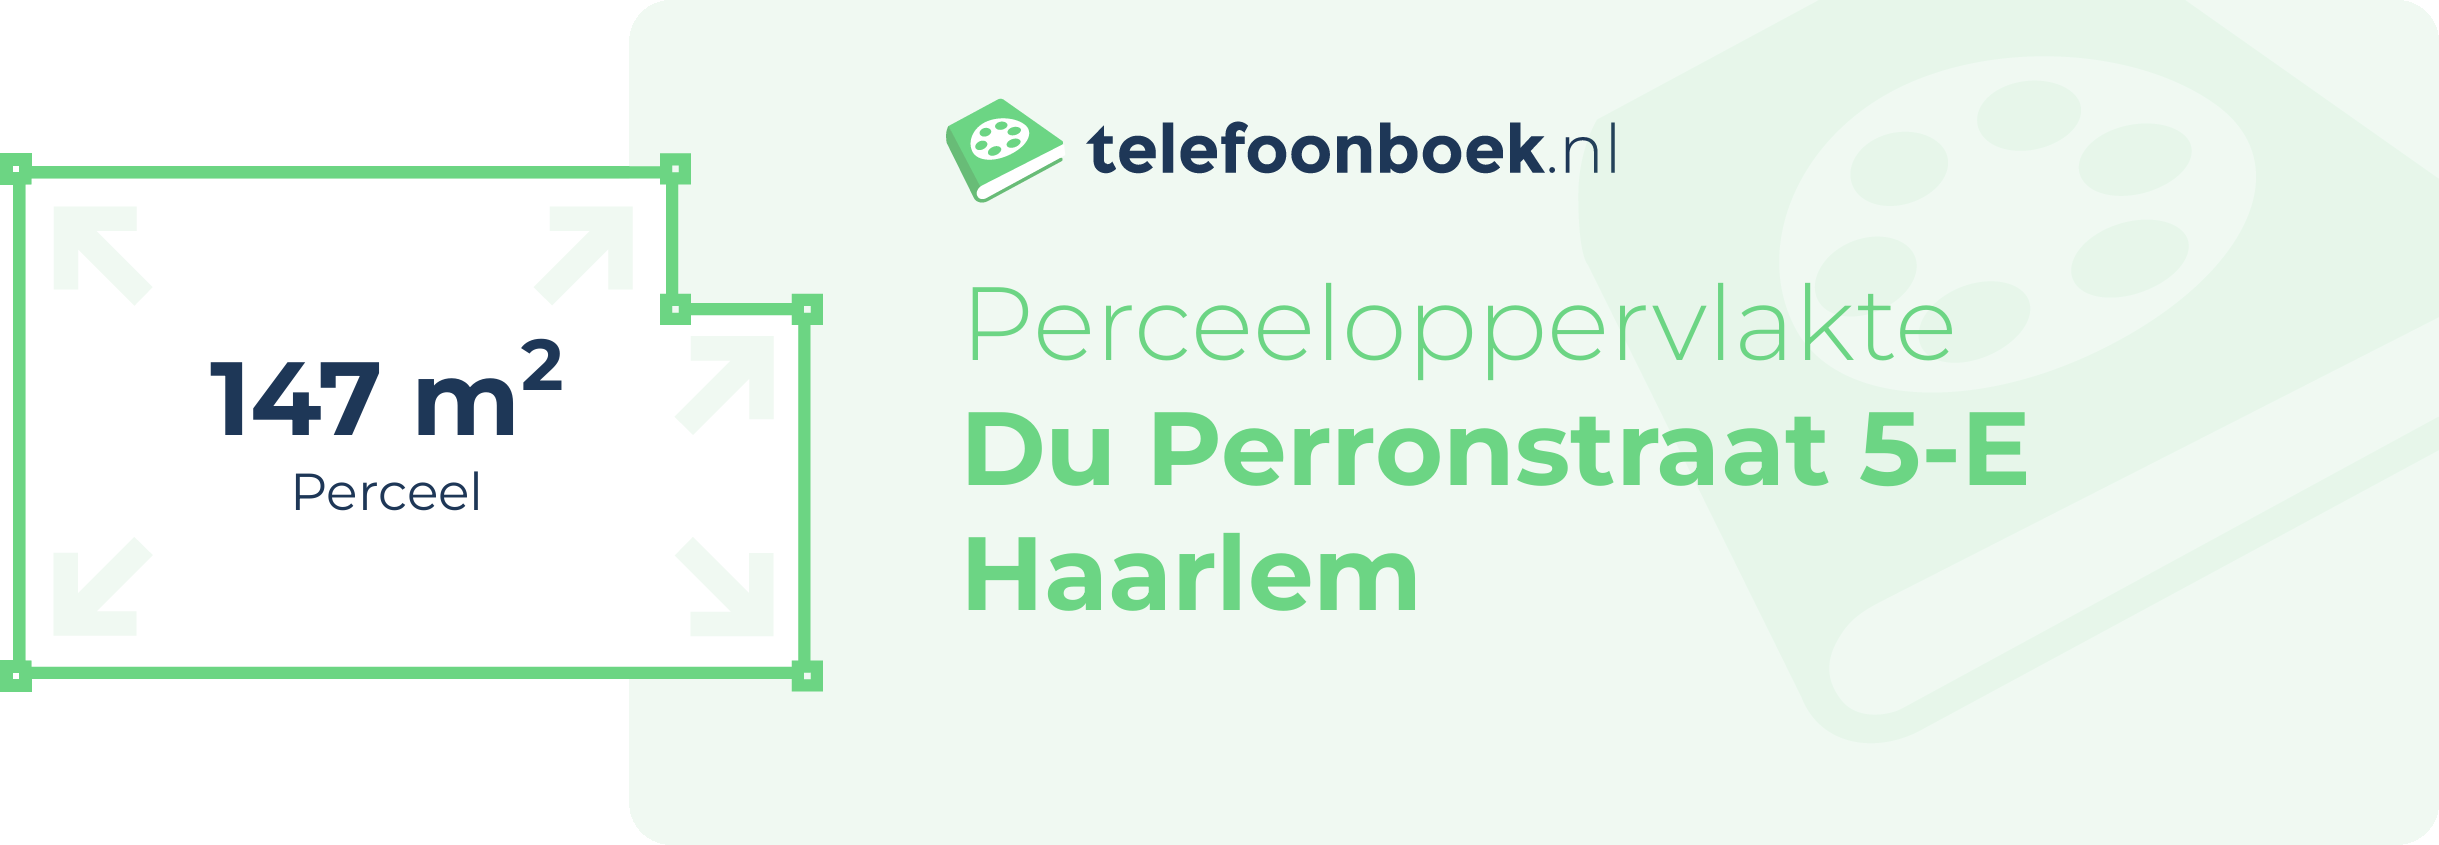 Perceeloppervlakte Du Perronstraat 5-E Haarlem